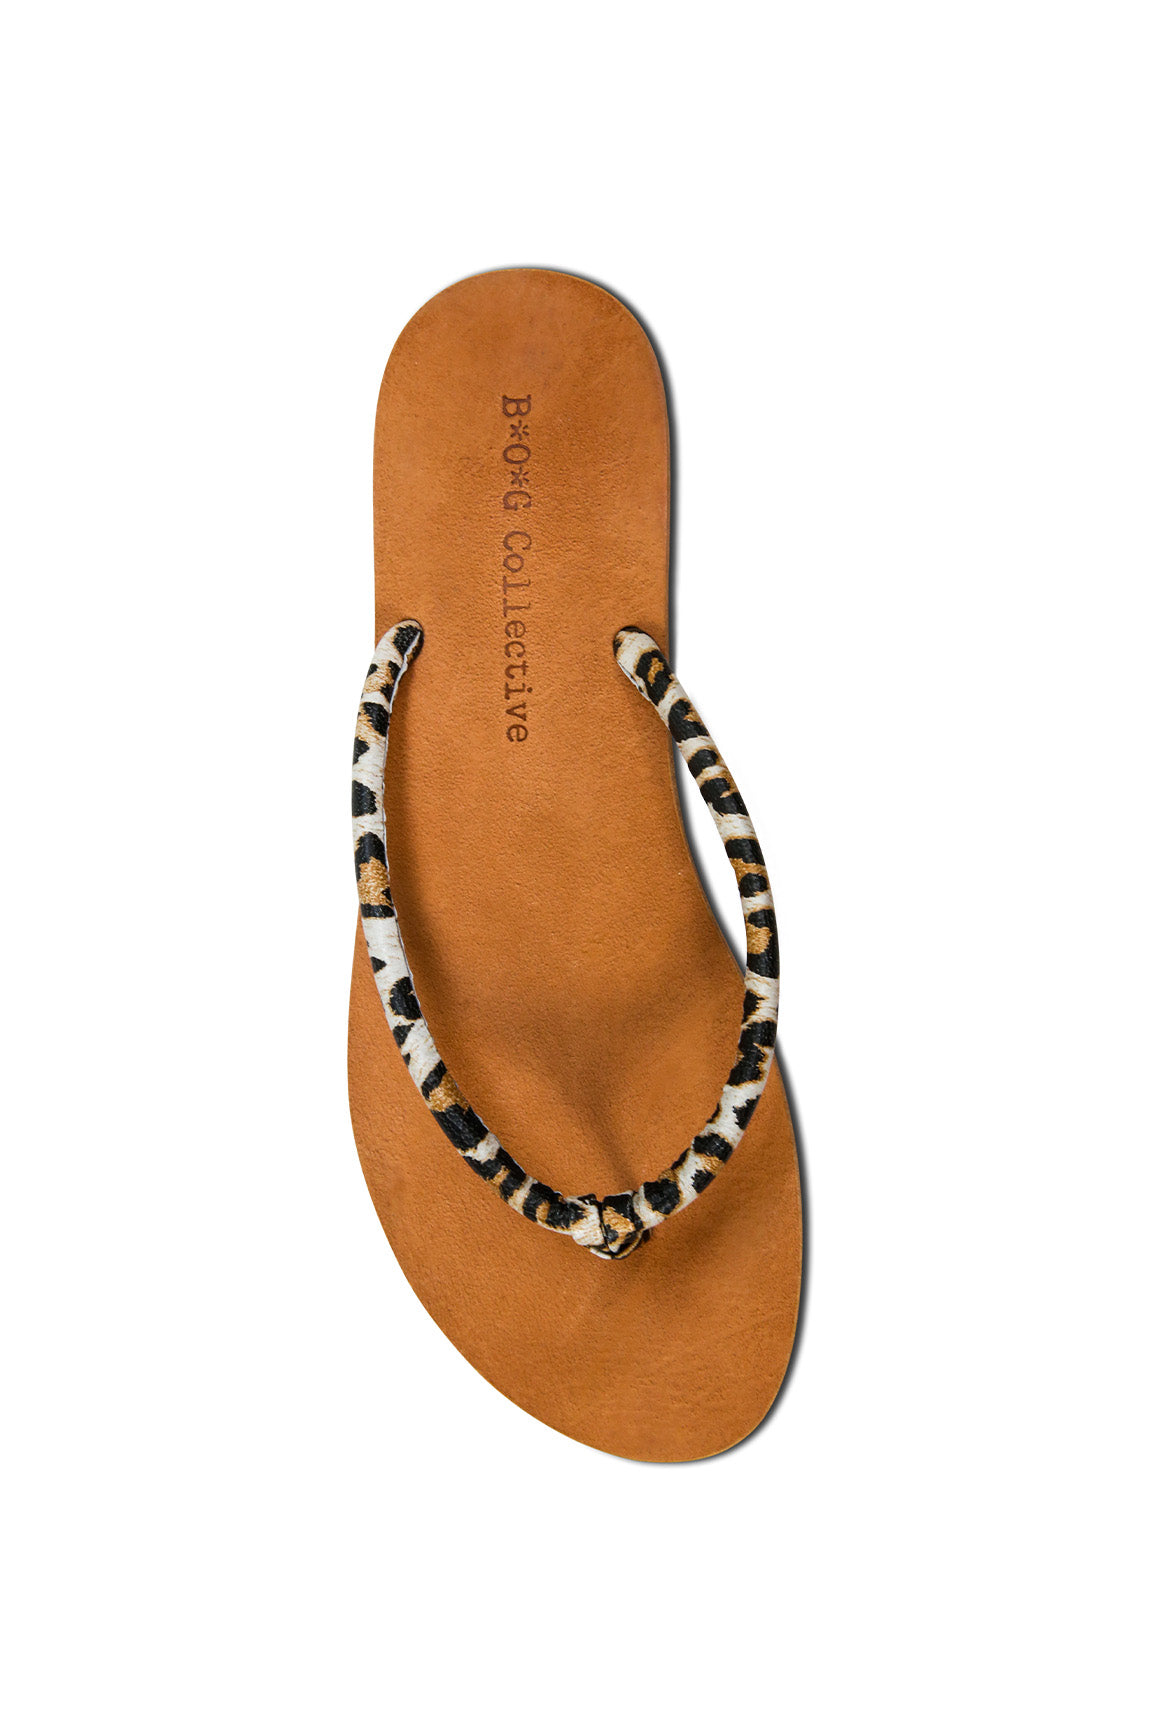 Pipa Leopard Leather Flip Flop Sandal Top